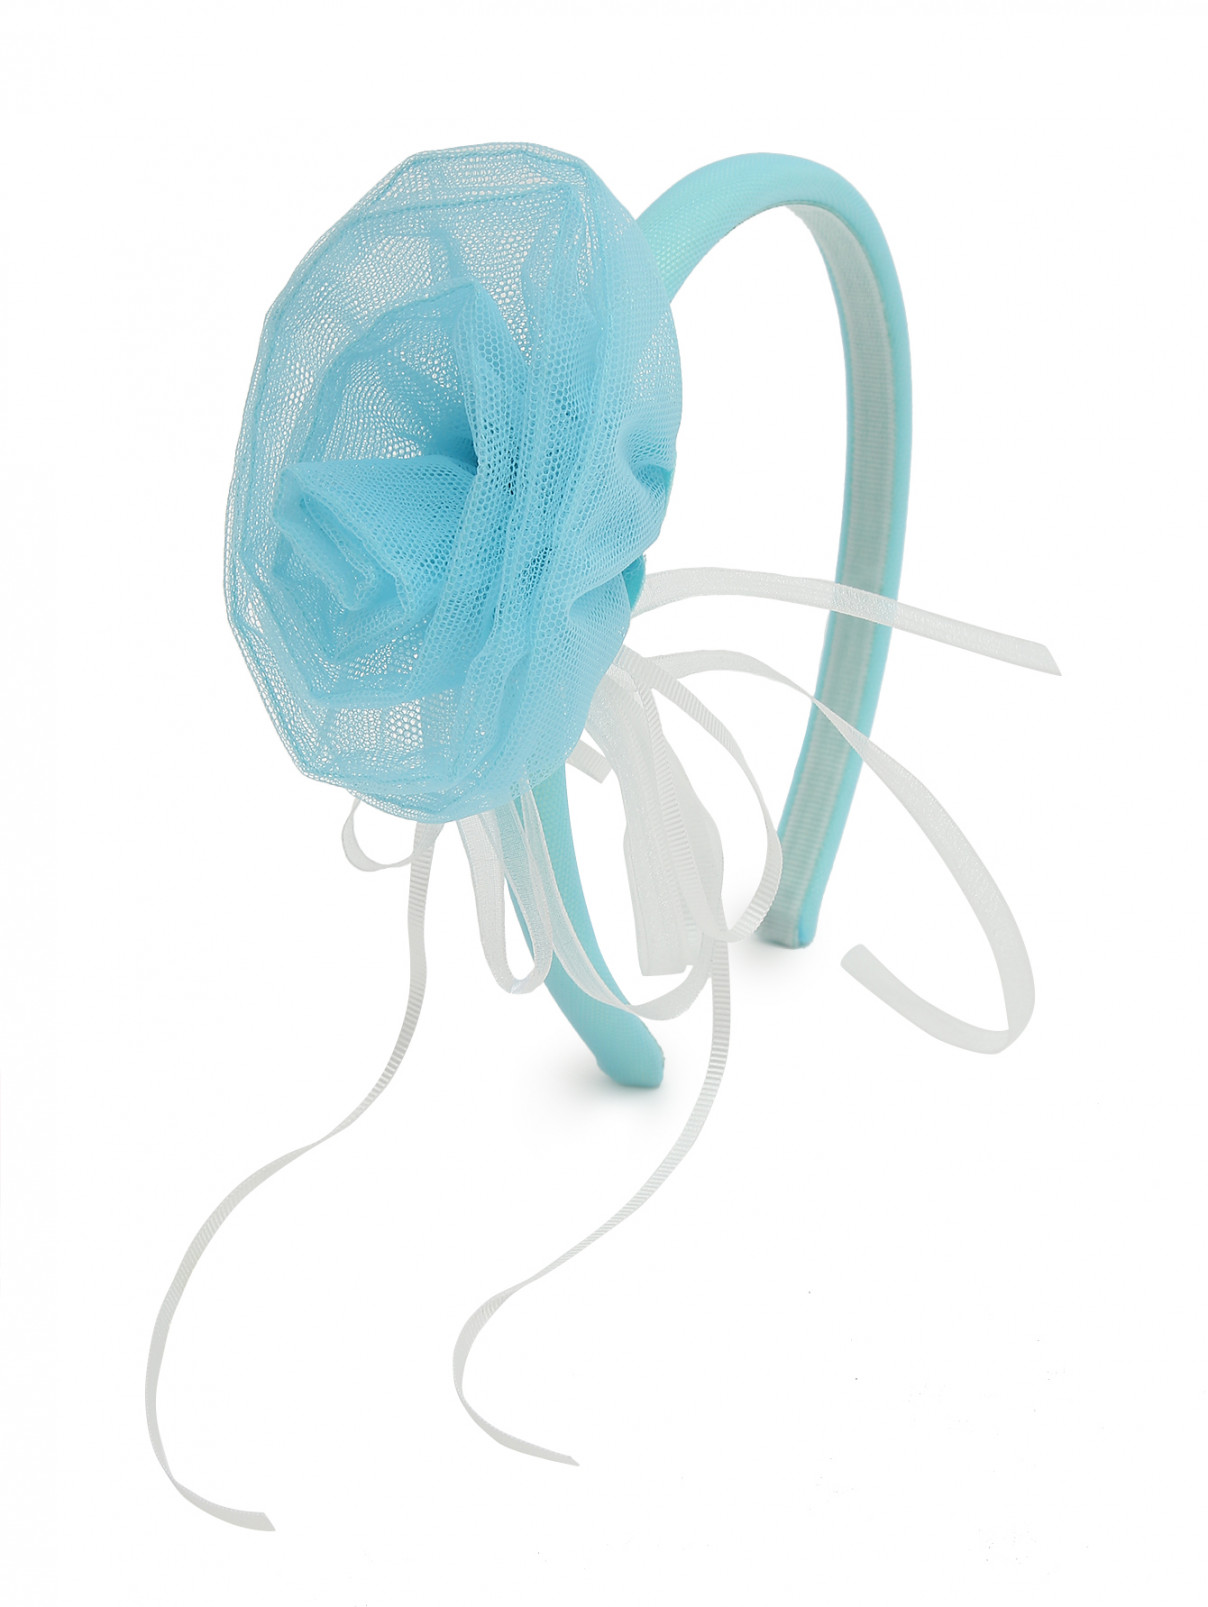 Ободок с декором Aletta Couture  –  Общий вид  – Цвет:  Синий